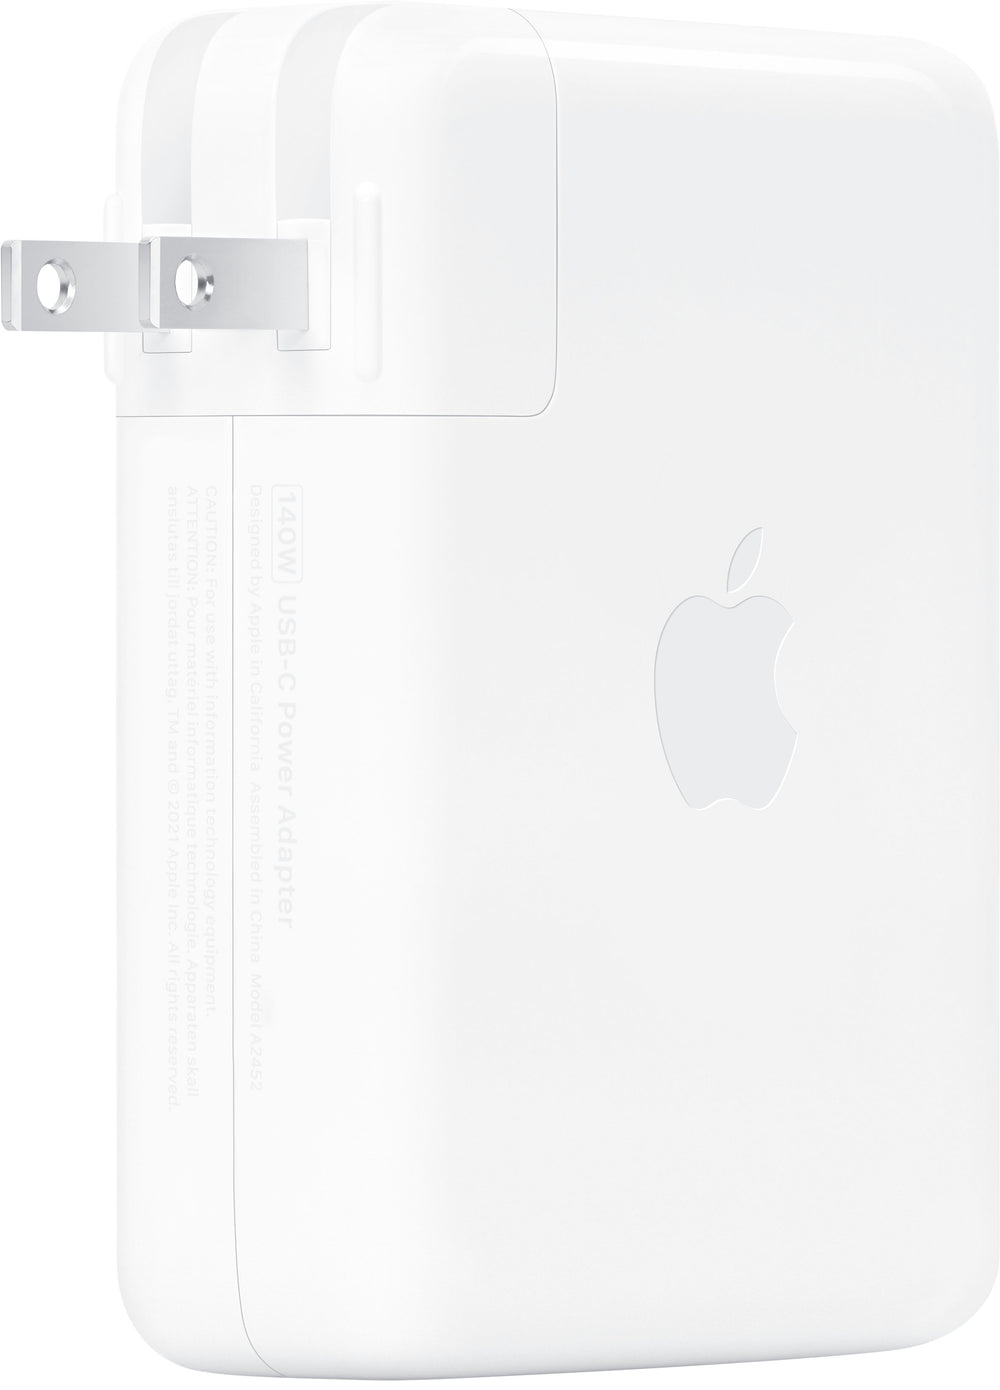 Apple - 140W USB-C Power Adapter - White_1